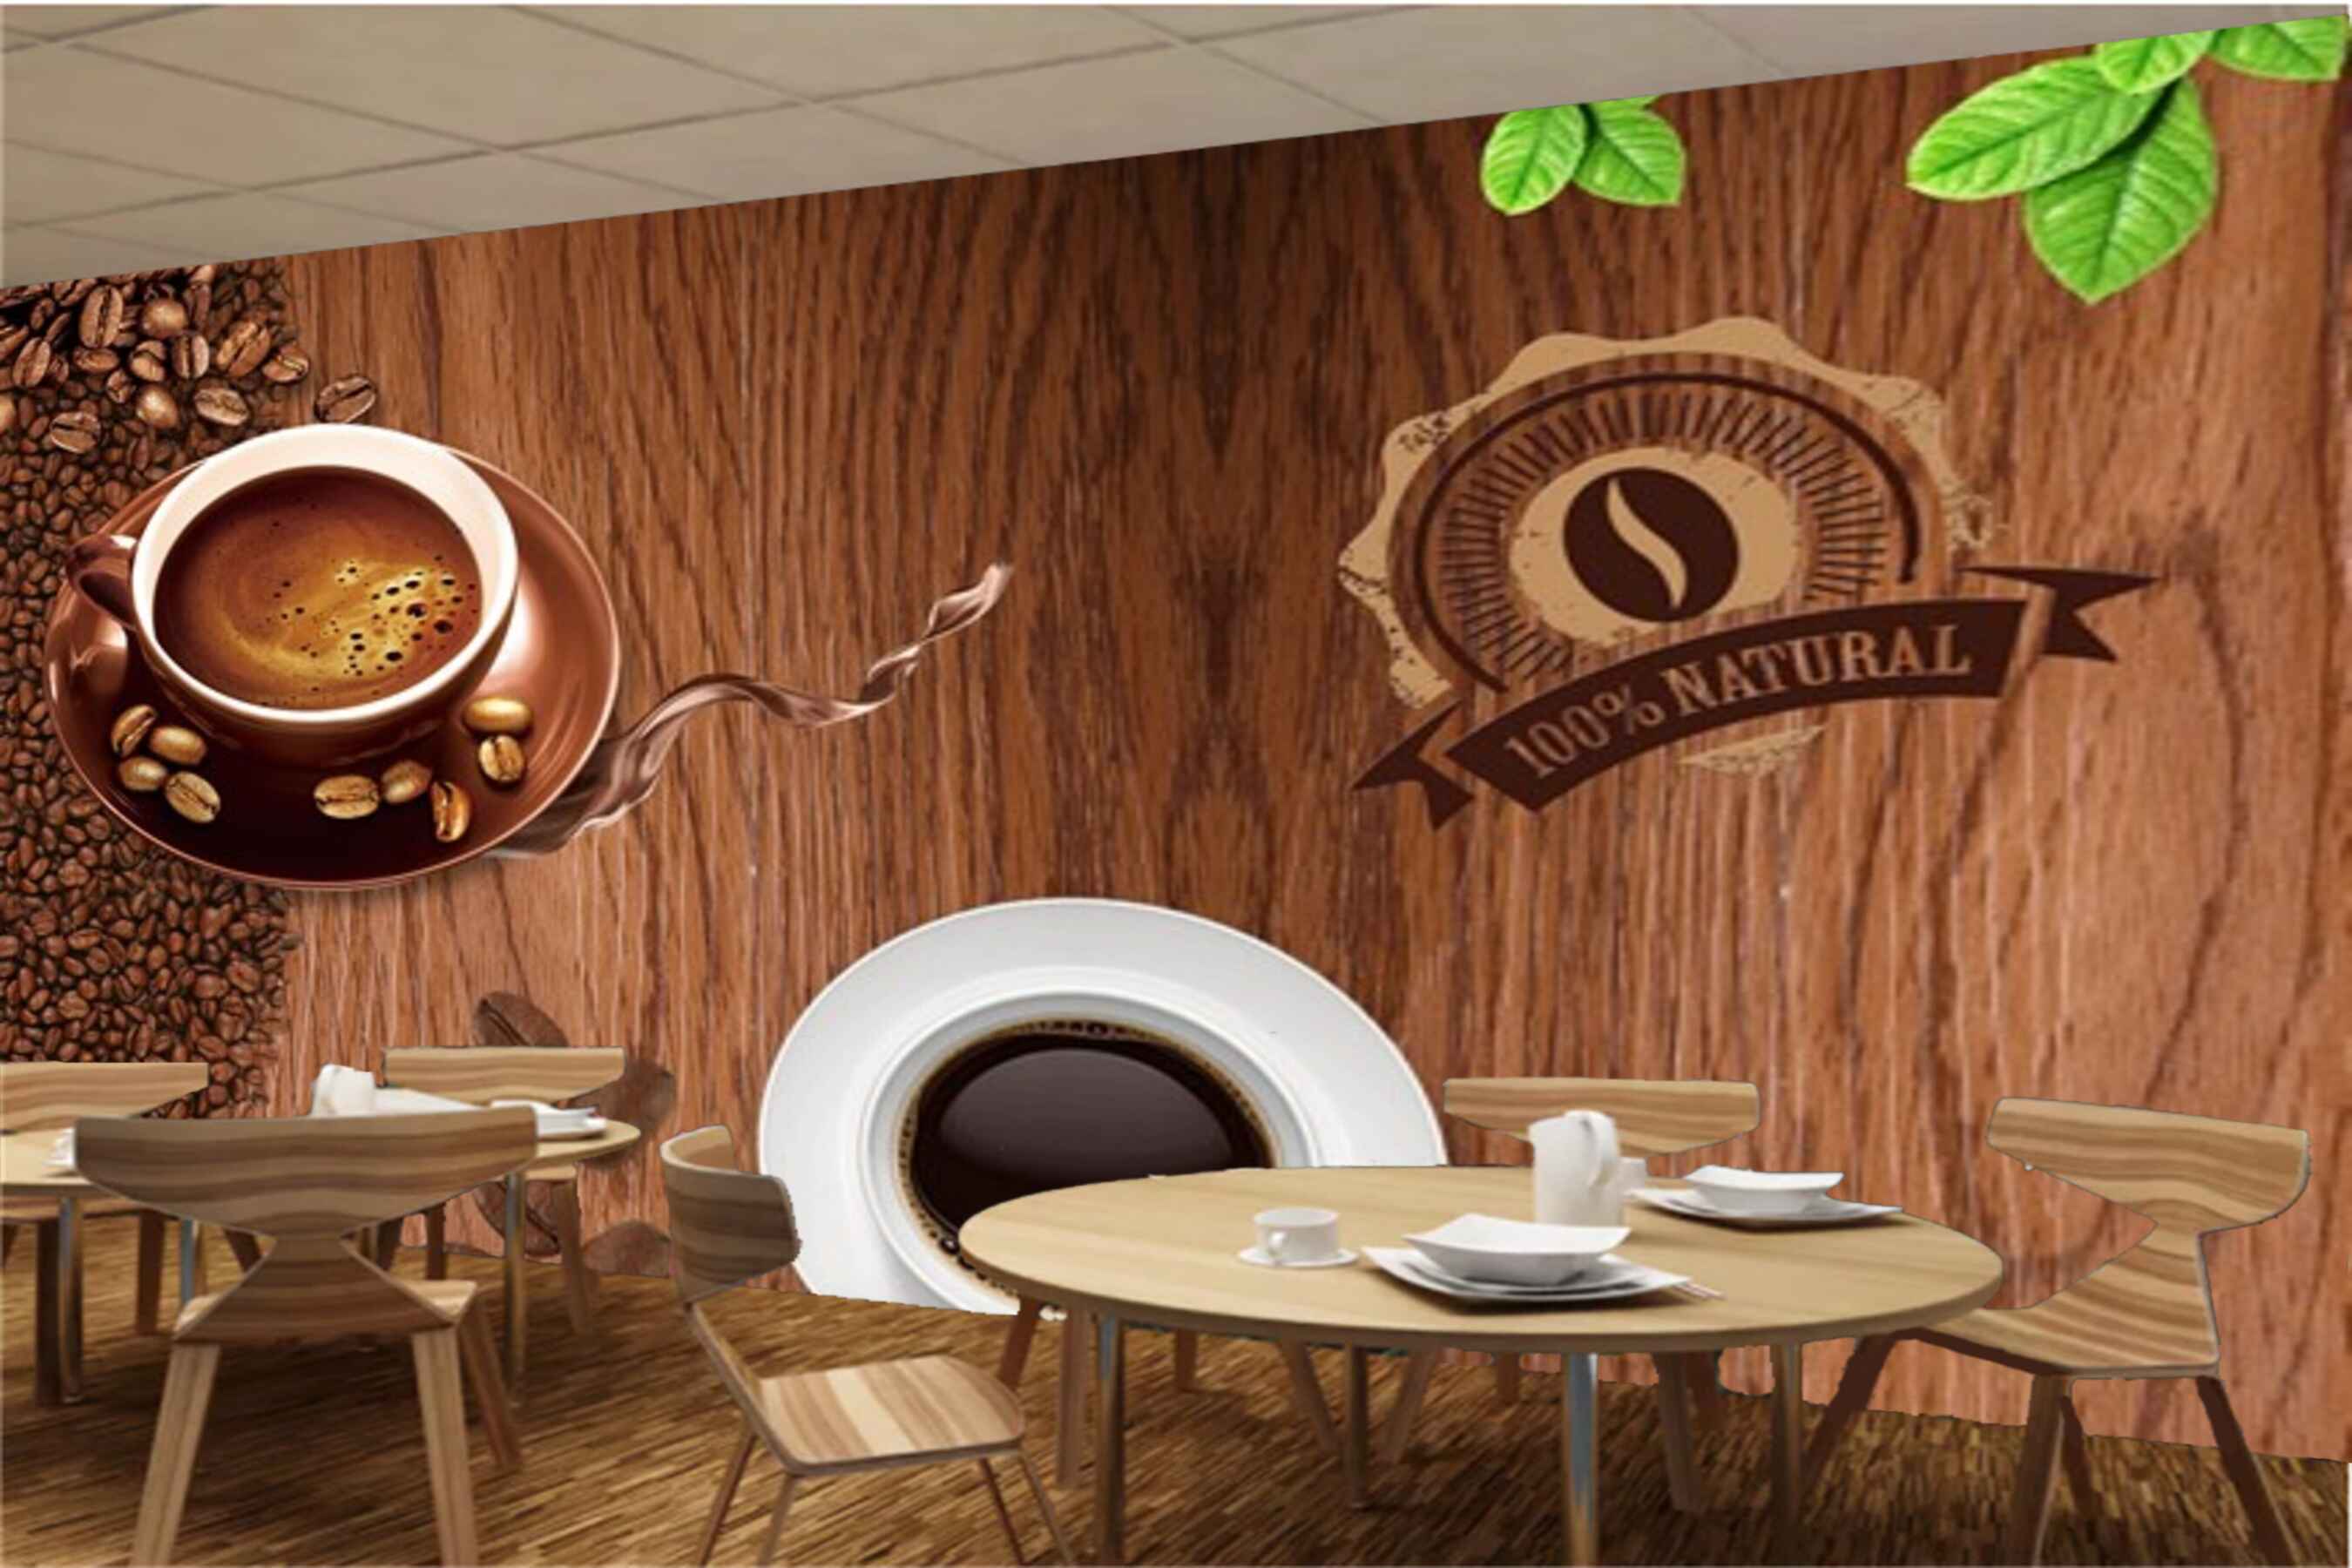 Avikalp MWZ2987 Coffee Beans Cups Saucers HD Wallpaper for Cafe Restaurant